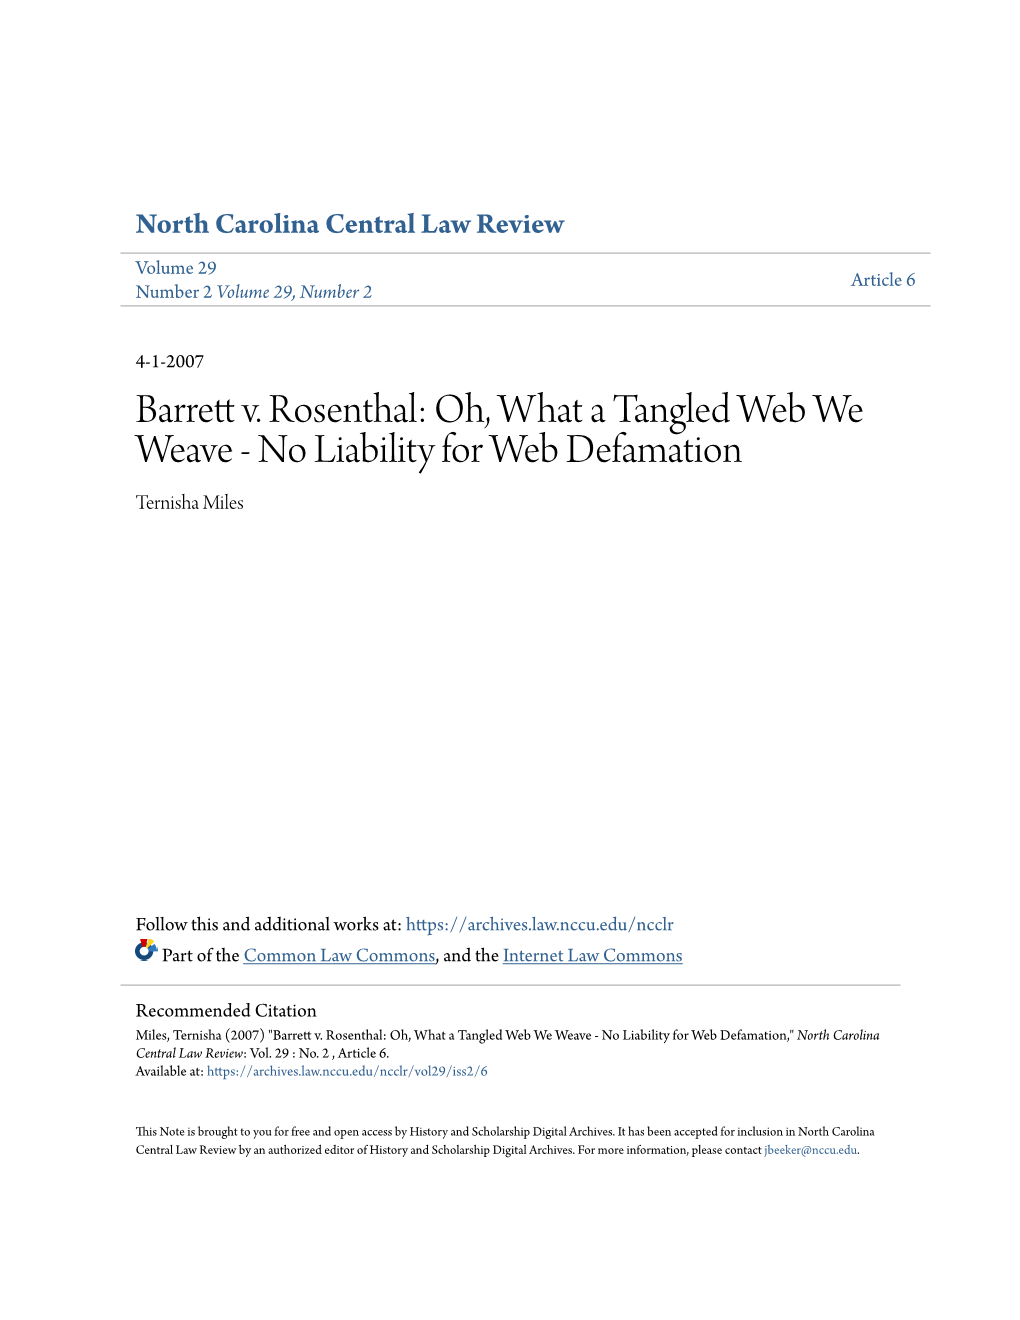 Barrett V. Rosenthal: Oh, What a Tangled Web We Weave - No Liabil